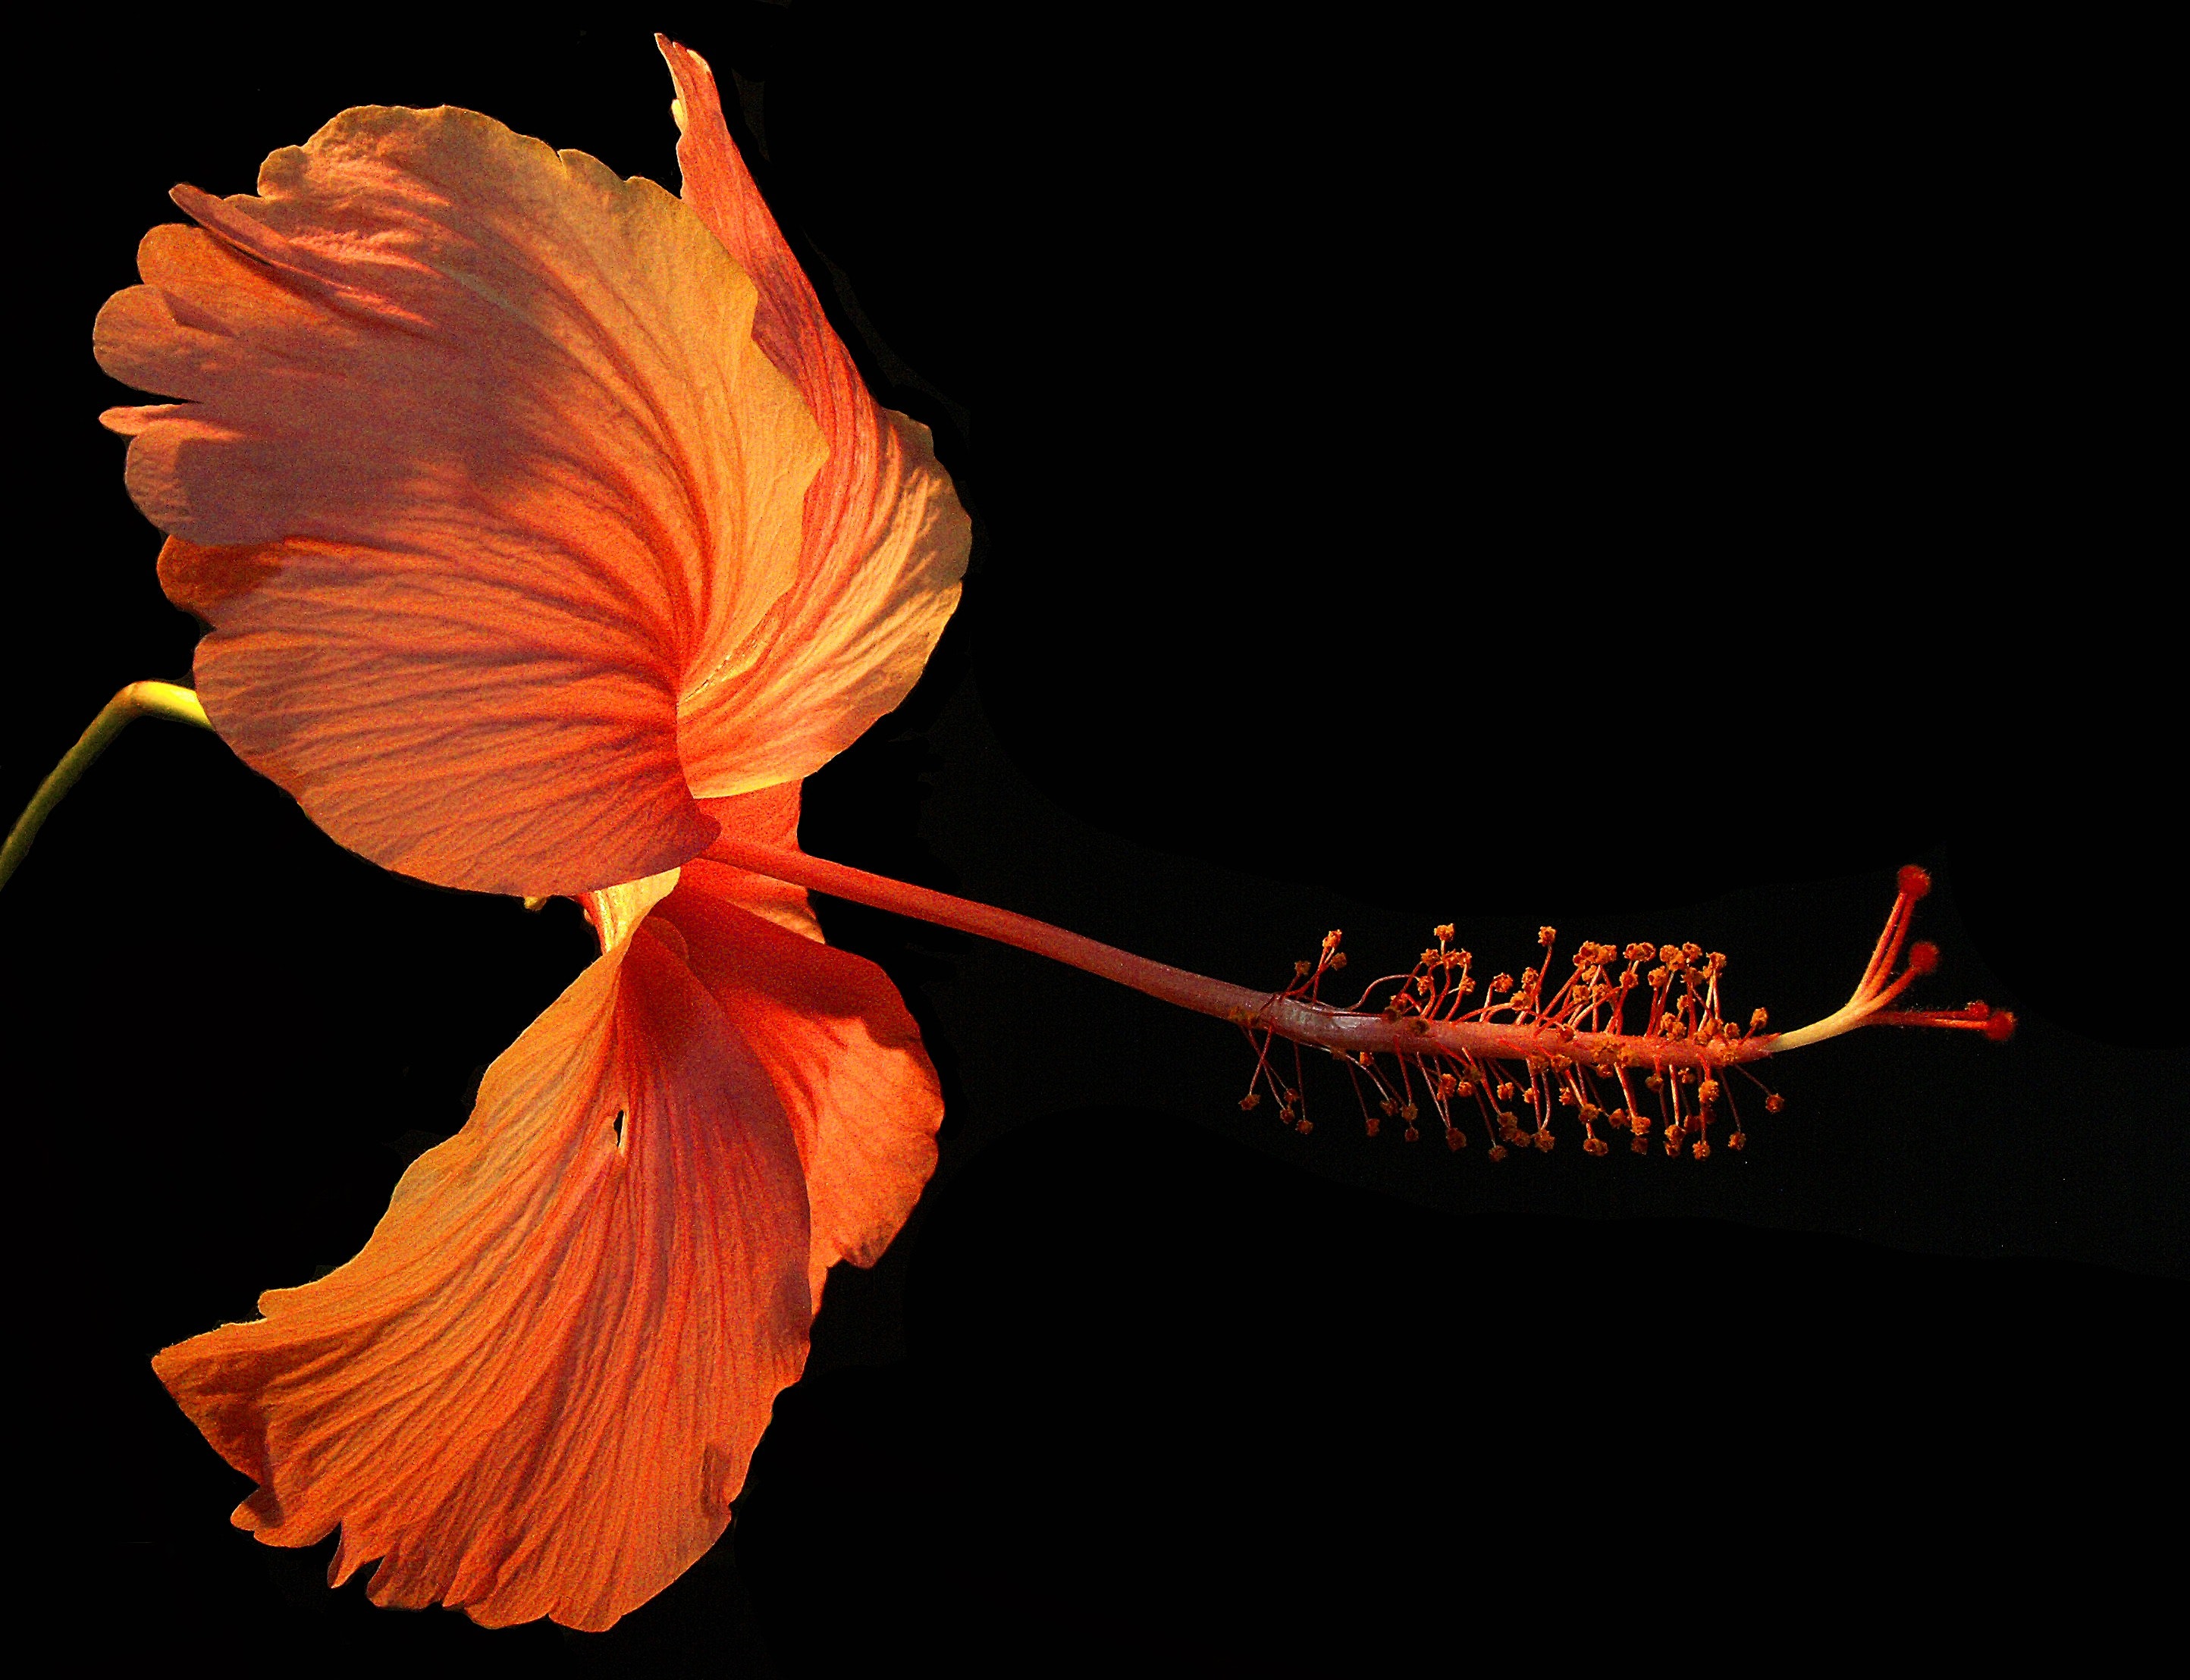 Orange Hibiscus Flower on Black Background · Free Stock Photo